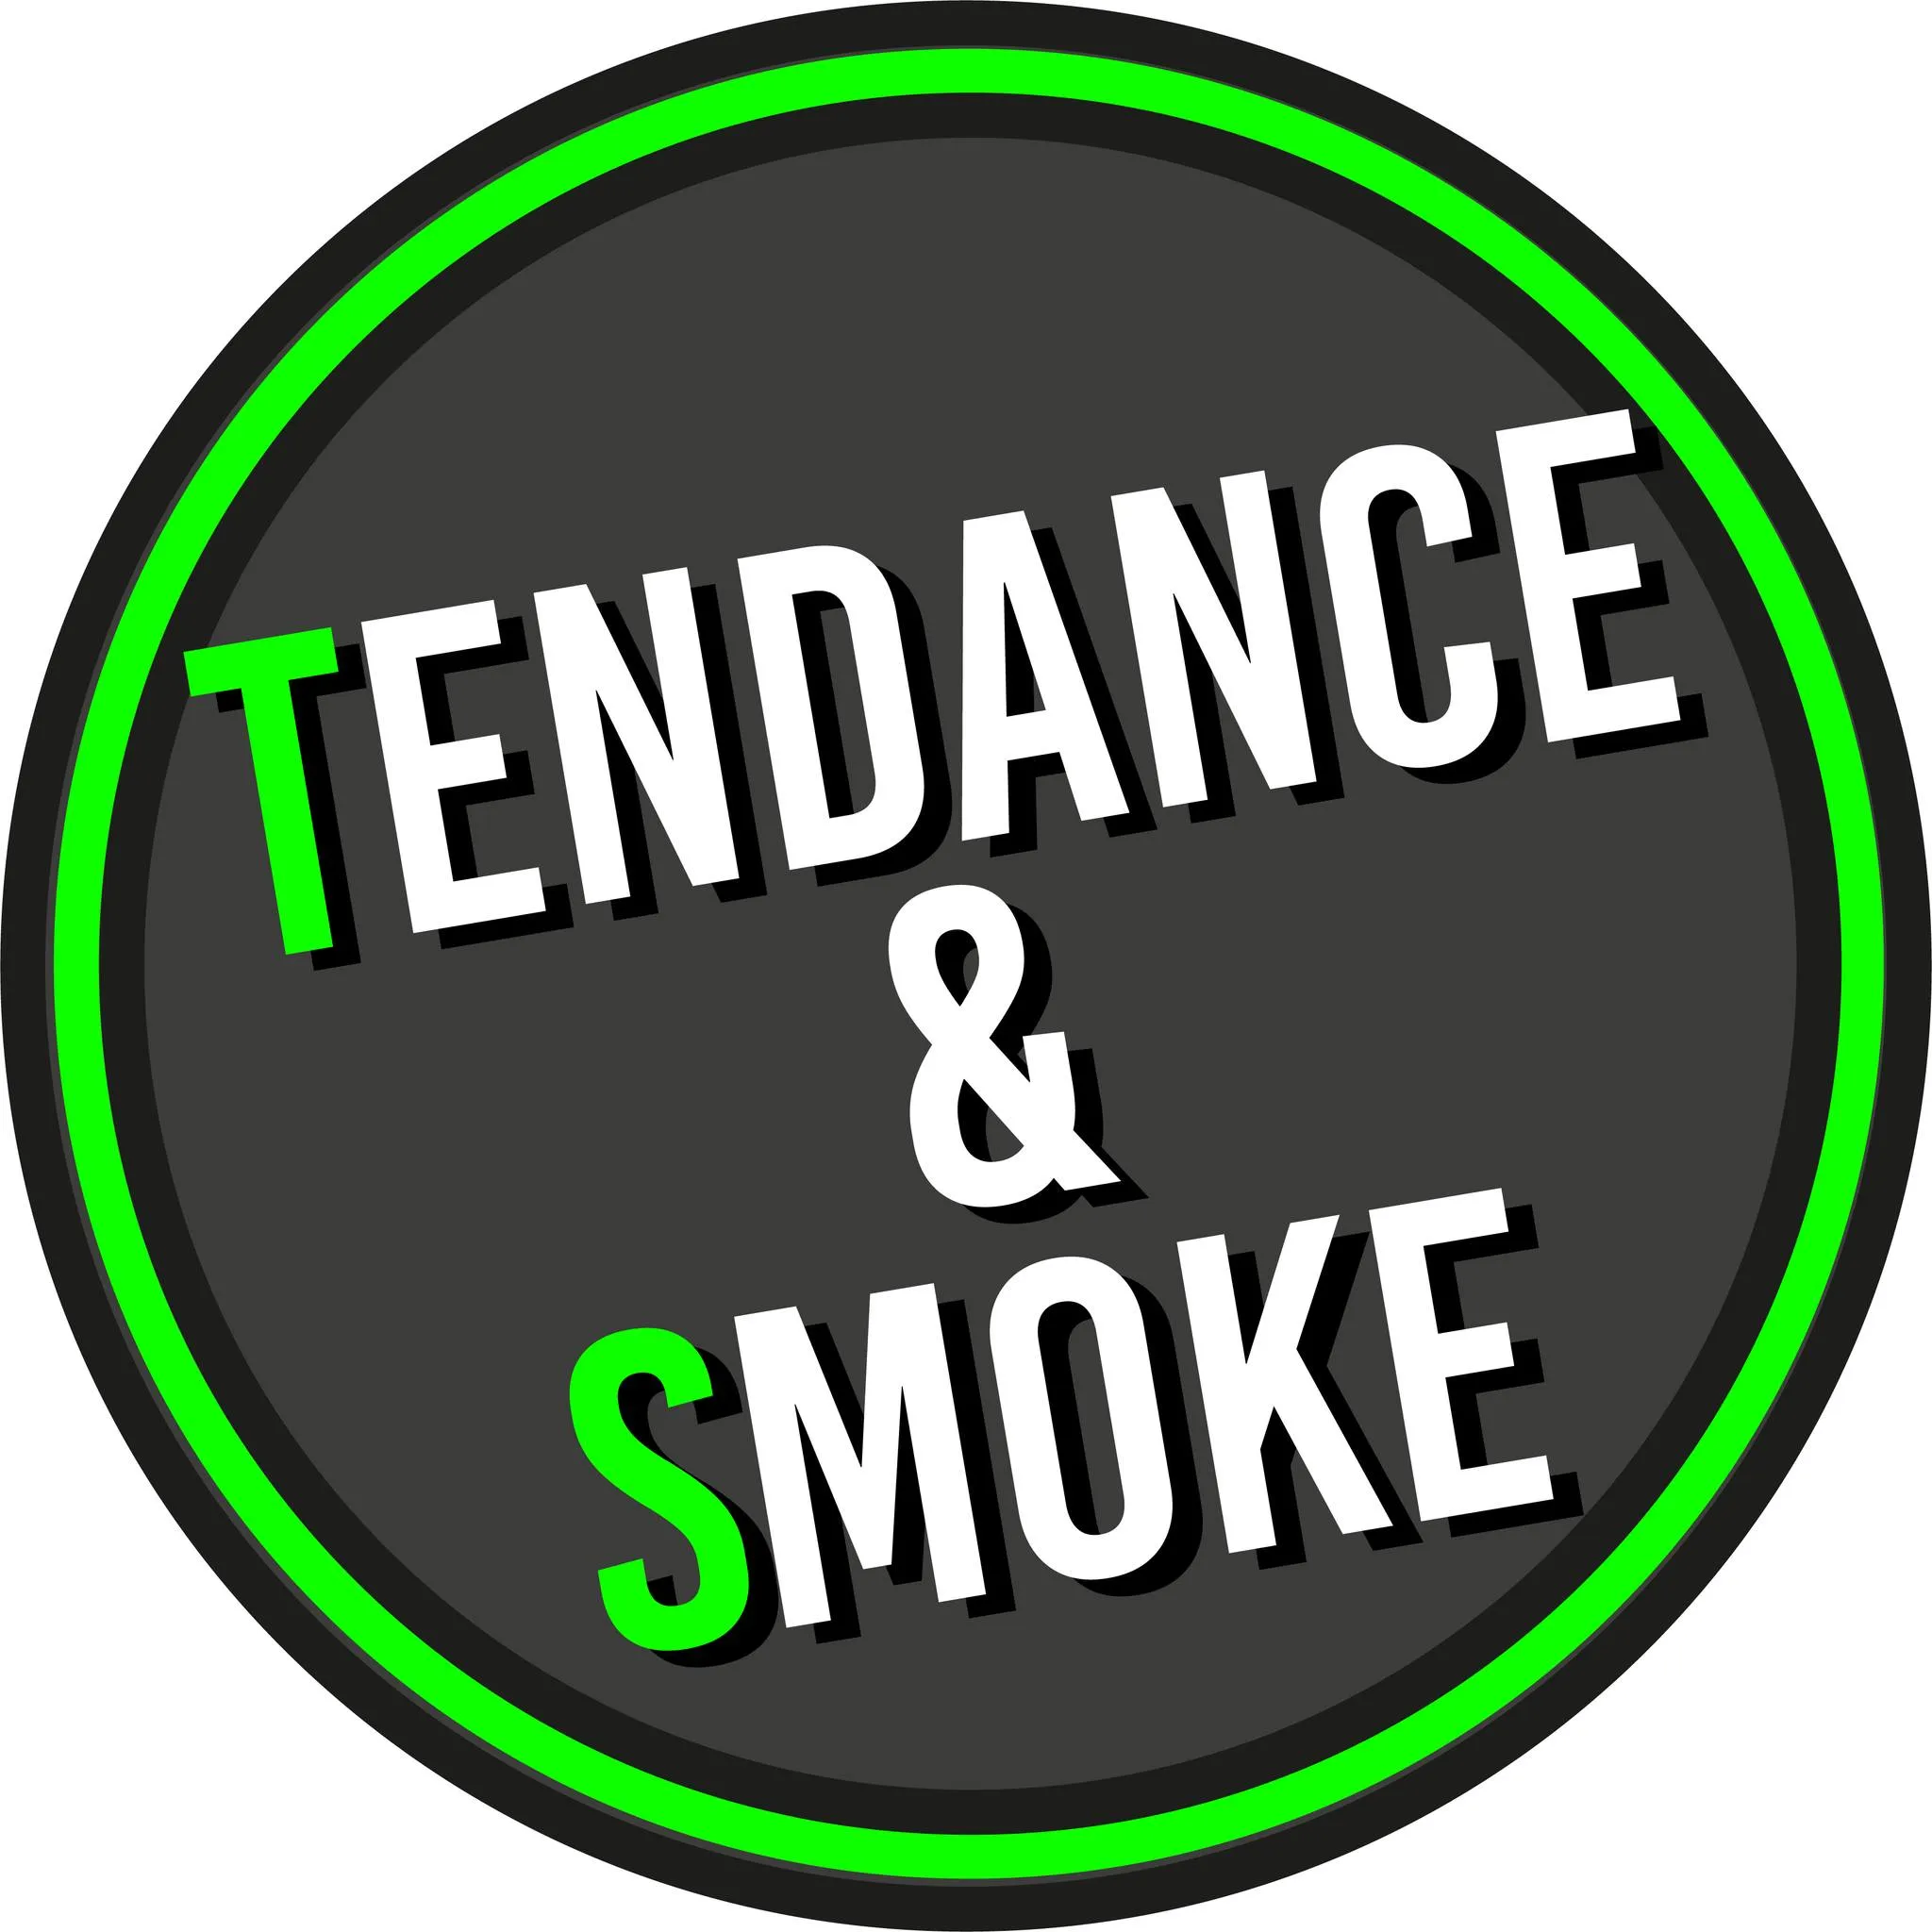  Tendance & Smoke